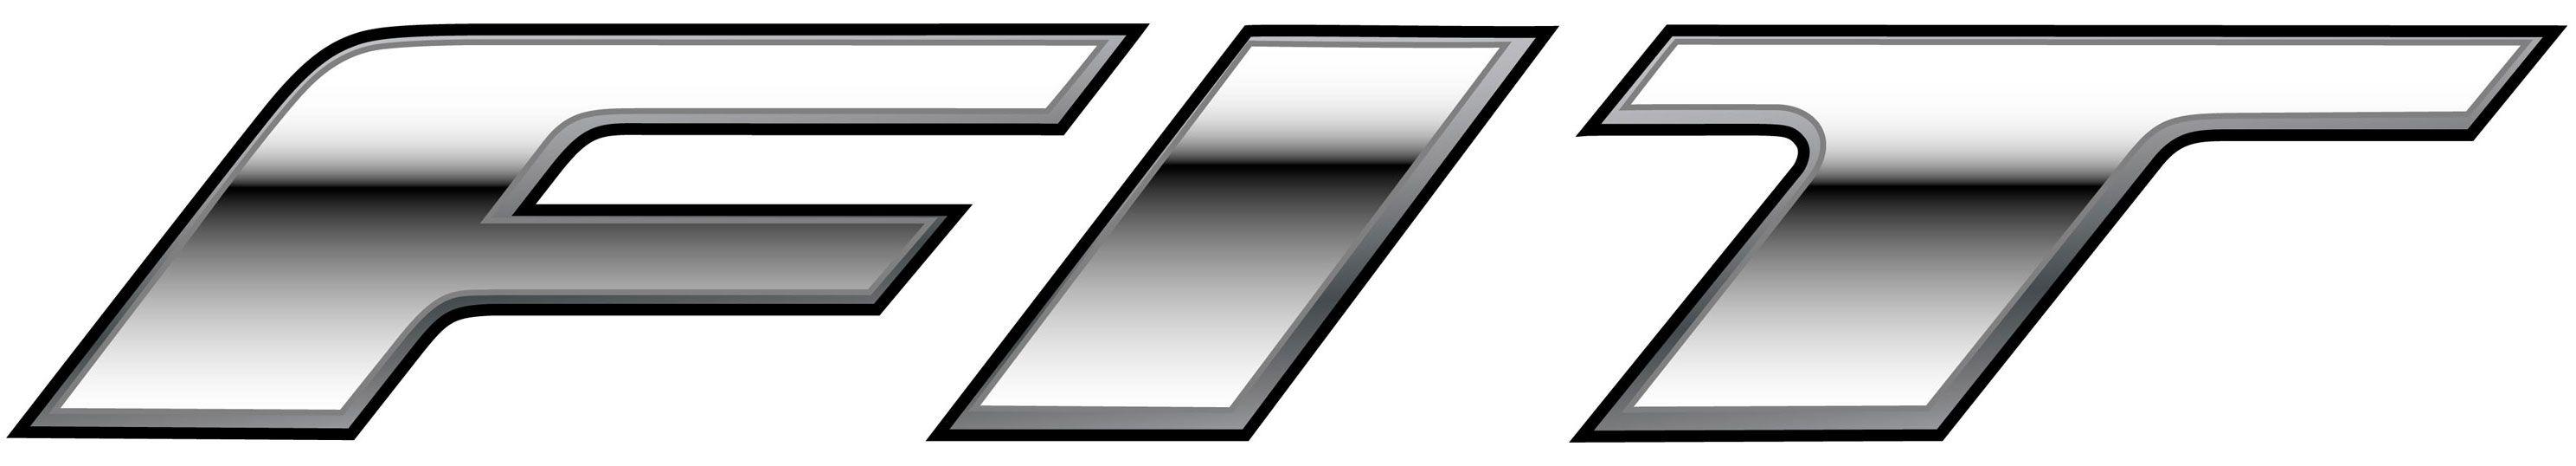 Honda Fit Logo - Honda related emblems | Cartype